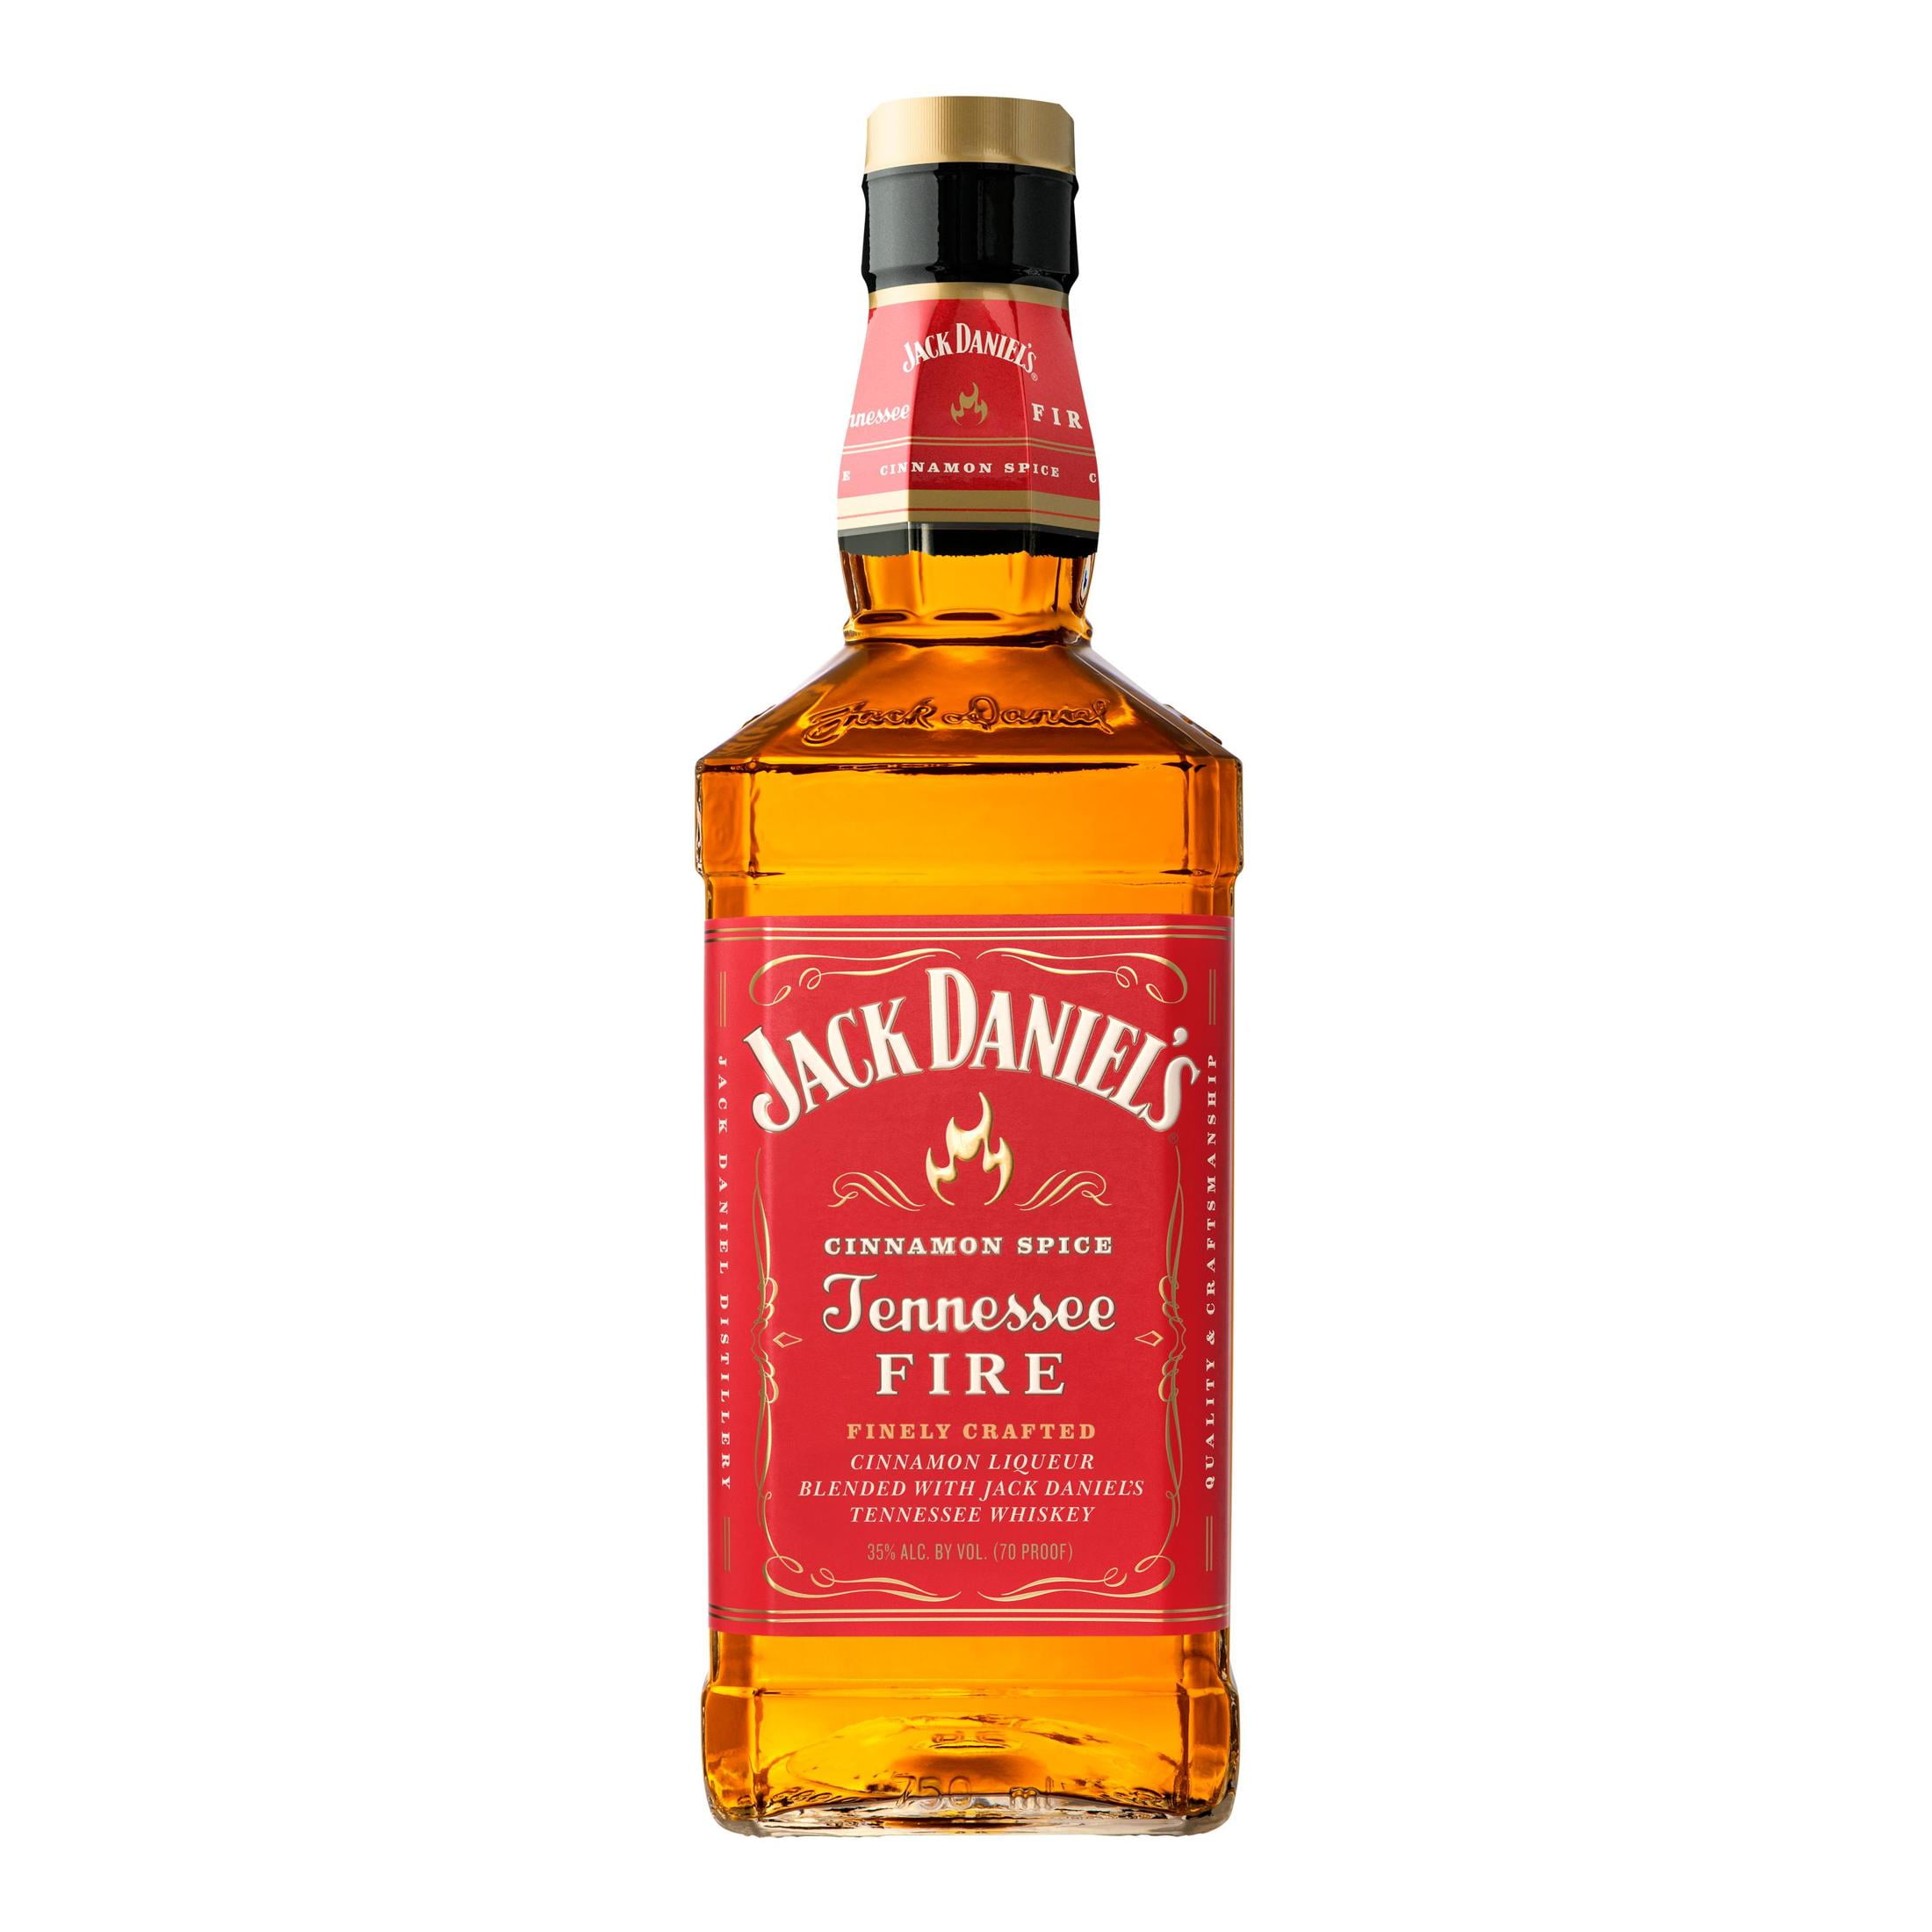 Jack Daniel's Tennessee Fire Whiskey Specialty, 750 ml Bottle, 70 Proof